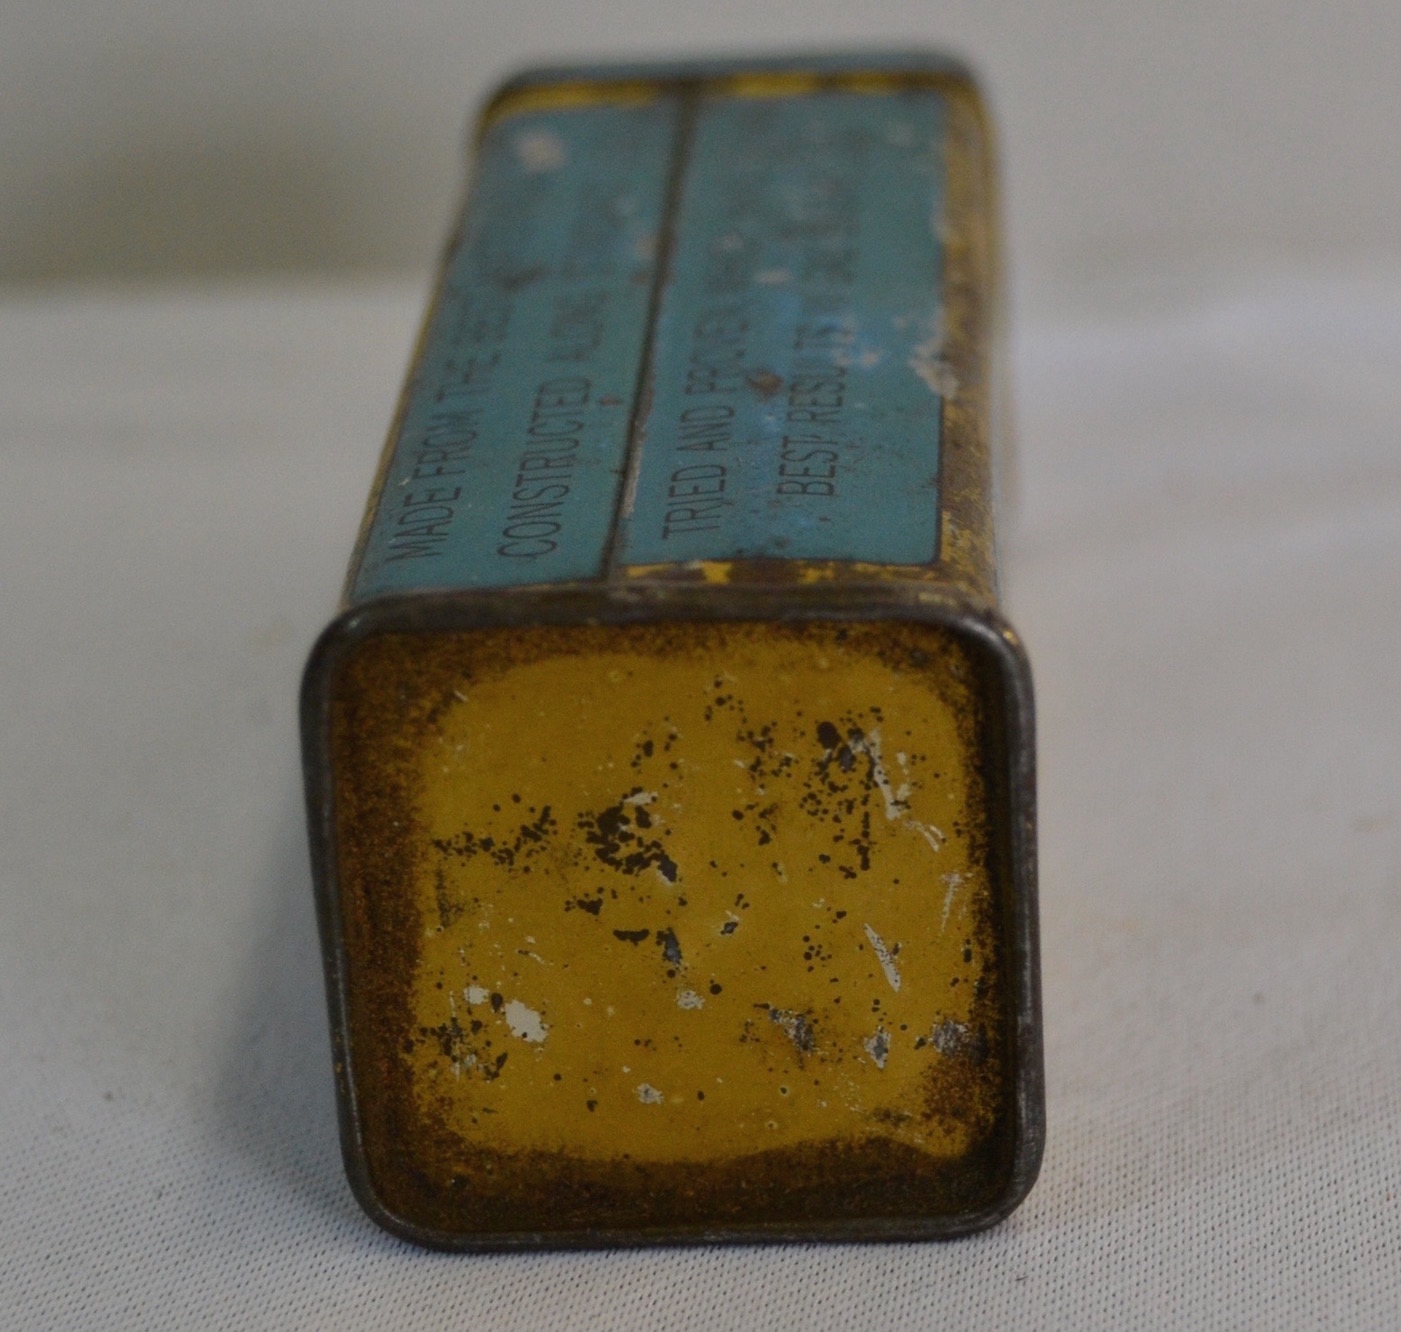 Sold at Auction: 8 Jacpol English Formula Antique Wax Polish Tins